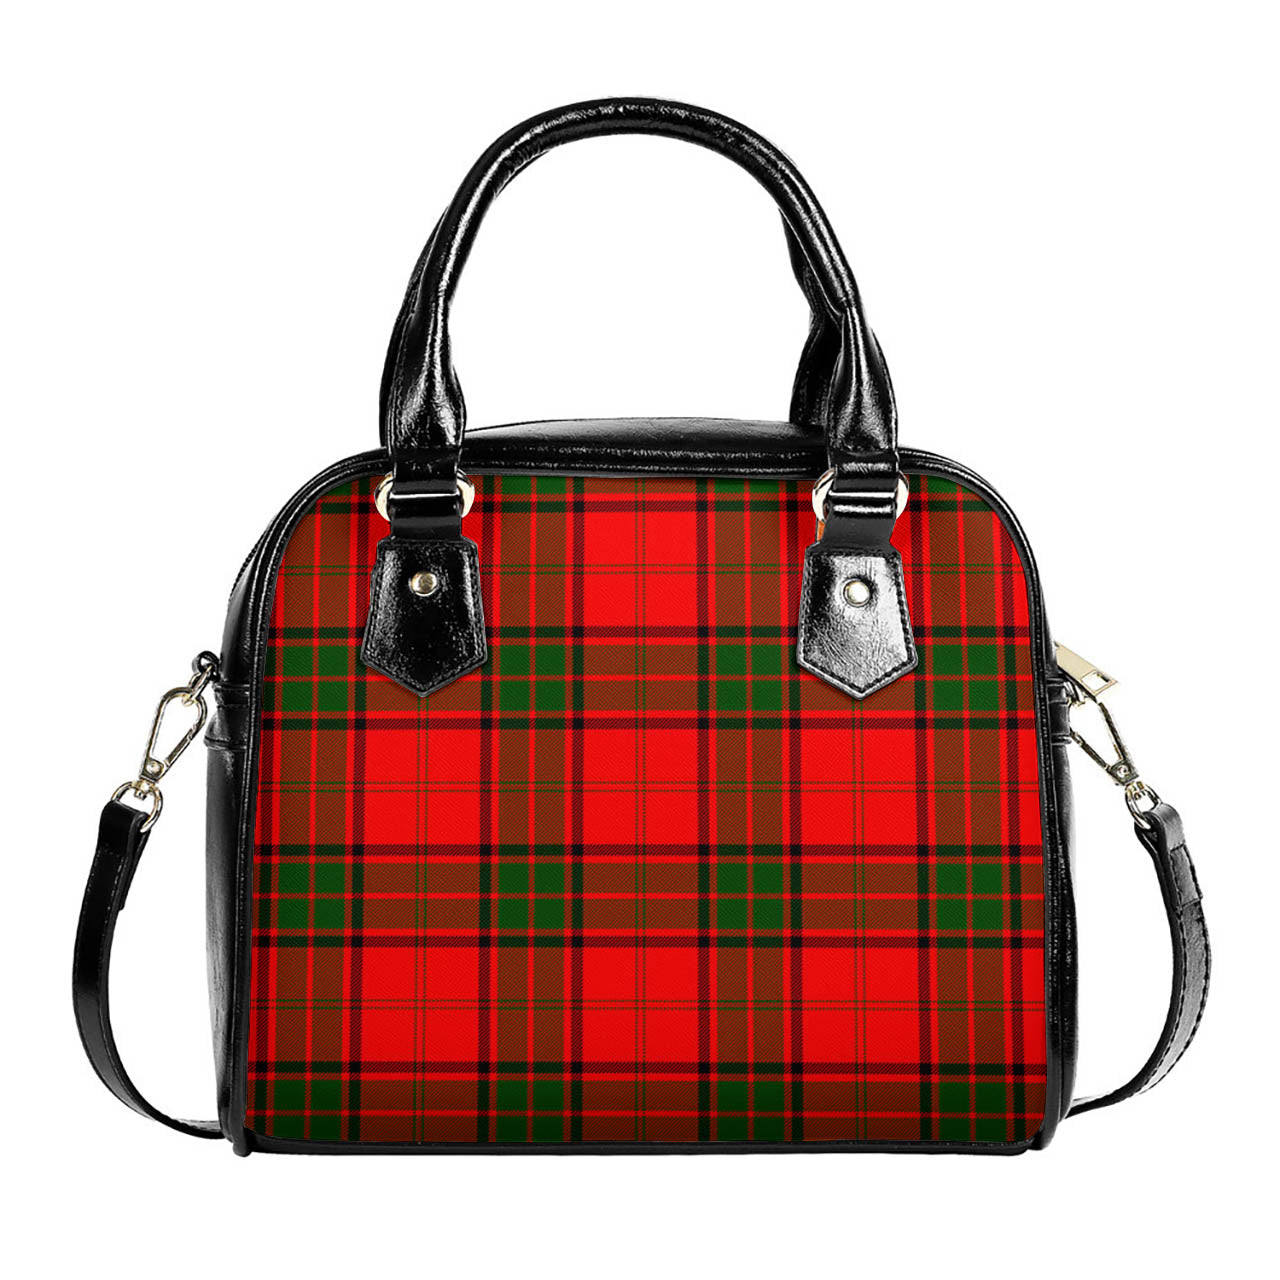 Maxtone Tartan Shoulder Handbags One Size 6*25*22 cm - Tartanvibesclothing